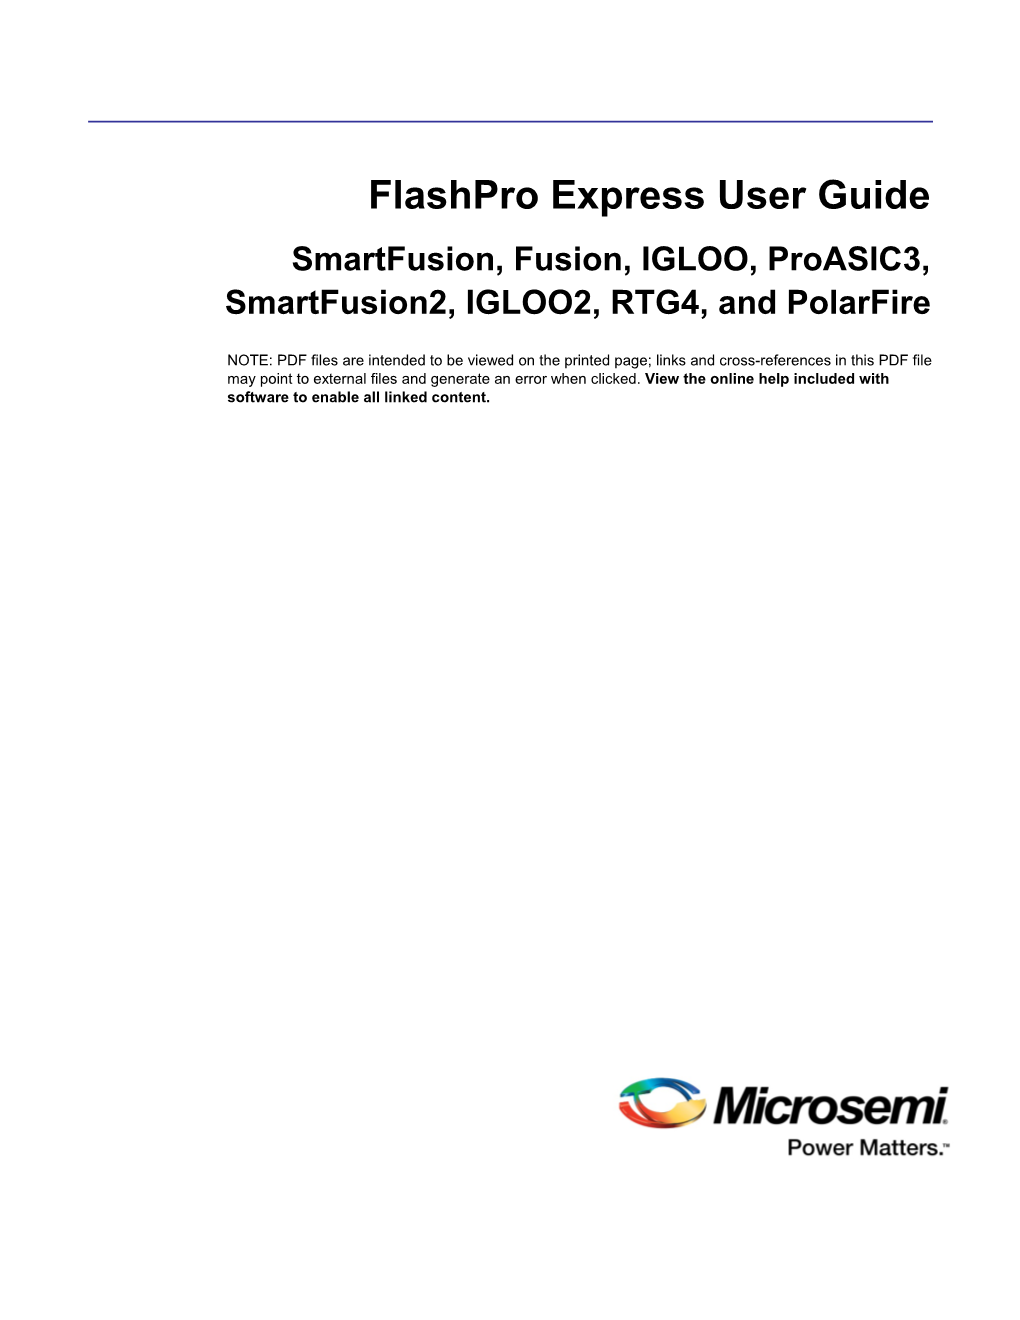 Flashpro Express User Guide Smartfusion, Fusion, IGLOO, Proasic3, Smartfusion2, IGLOO2, RTG4, and Polarfire